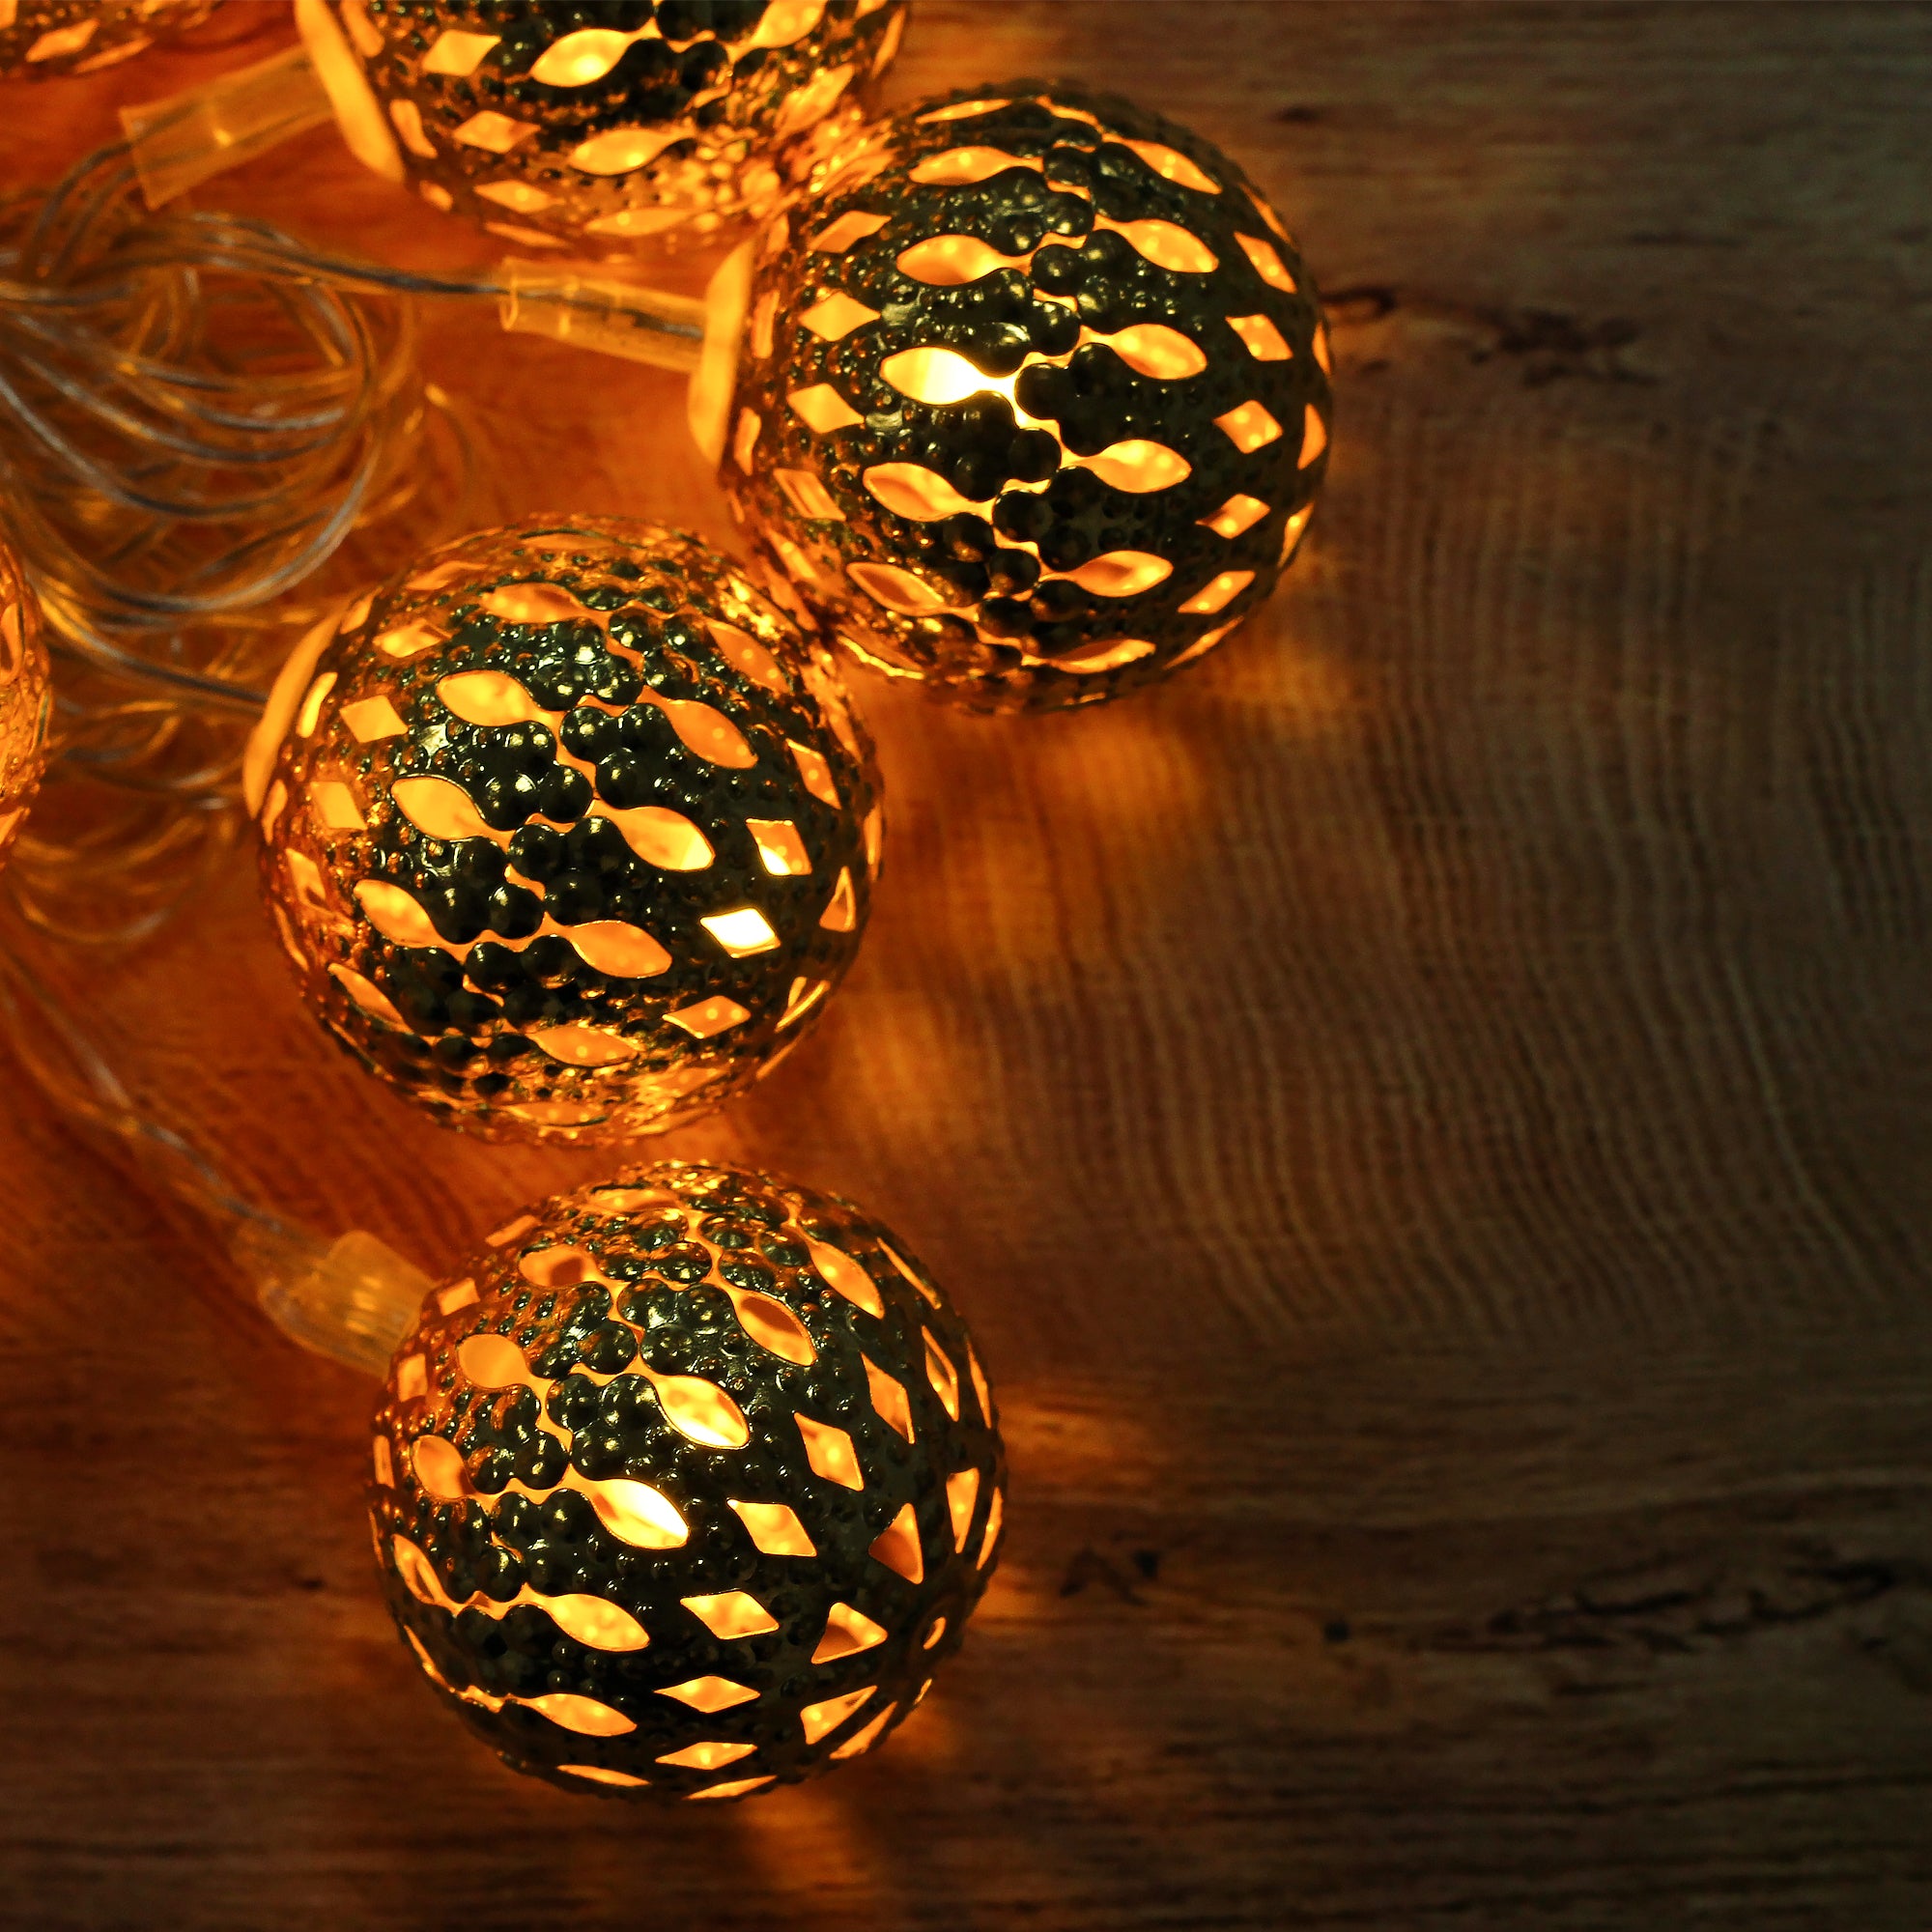 Decorative Crystal Ball Fairy Light 14Balls